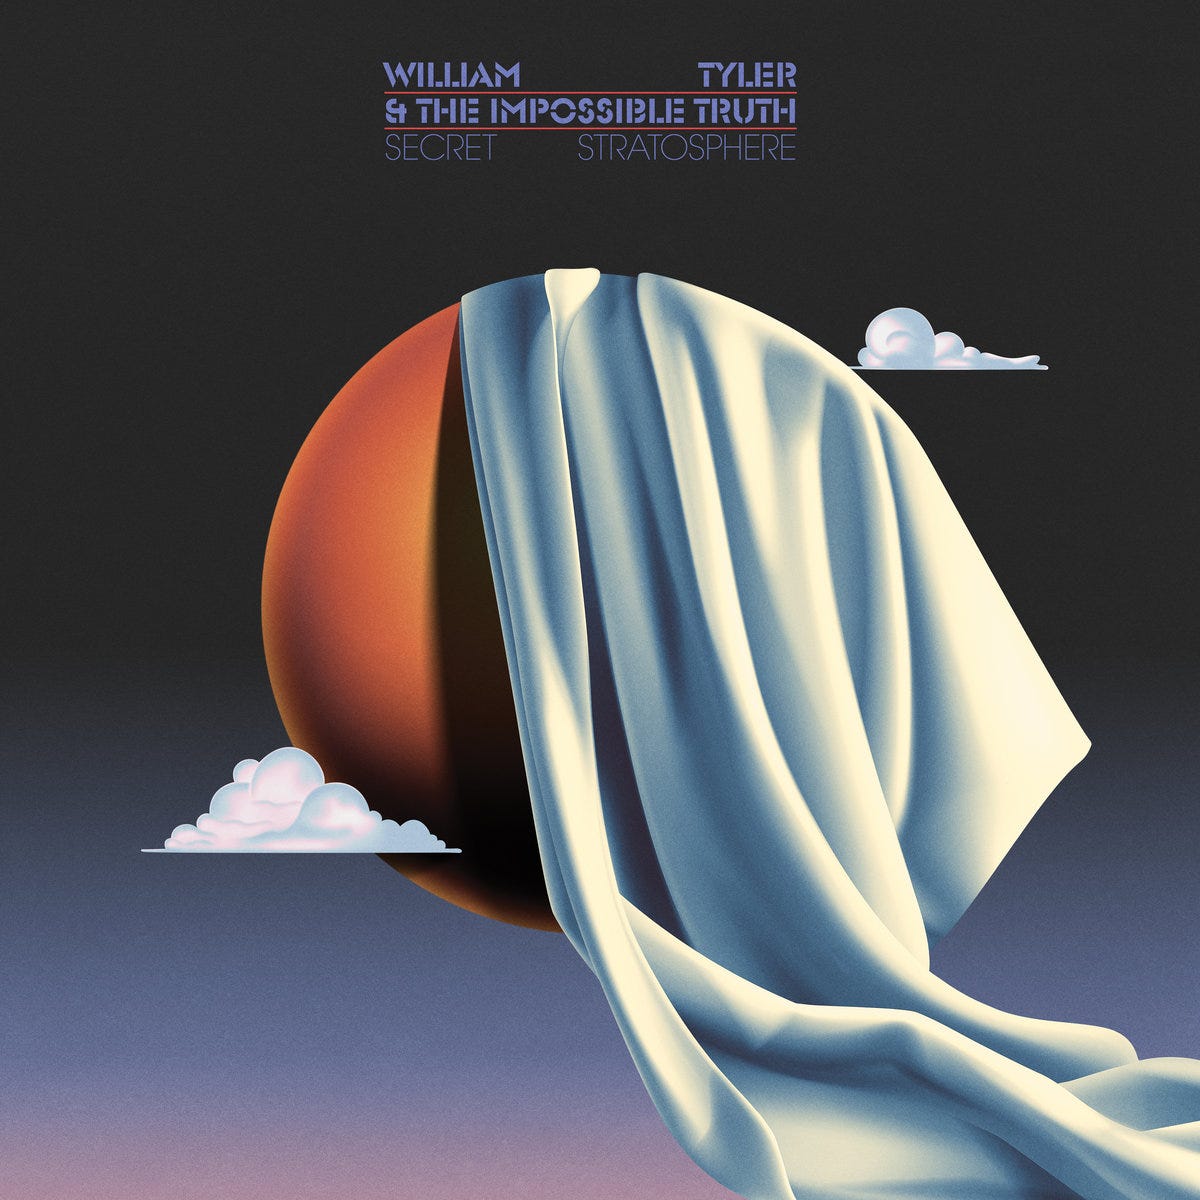 Secret Stratosphere | William Tyler & The Impossible Truth | William Tyler